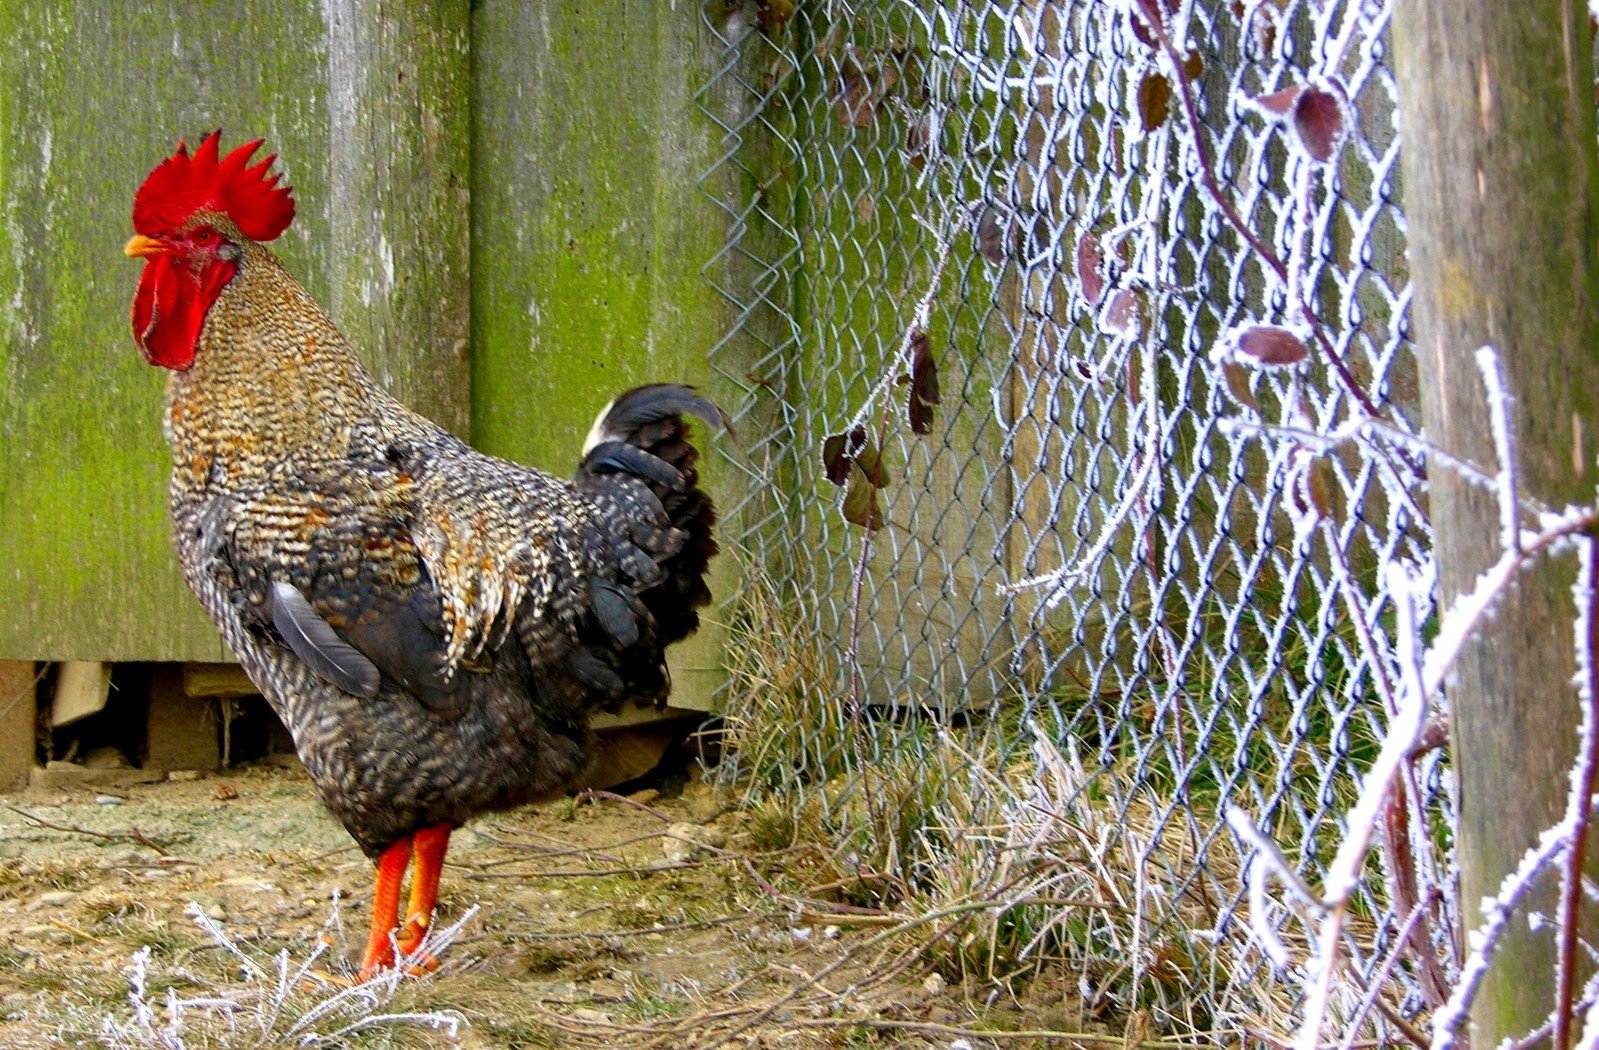 a chicken walks beside a chain link fence